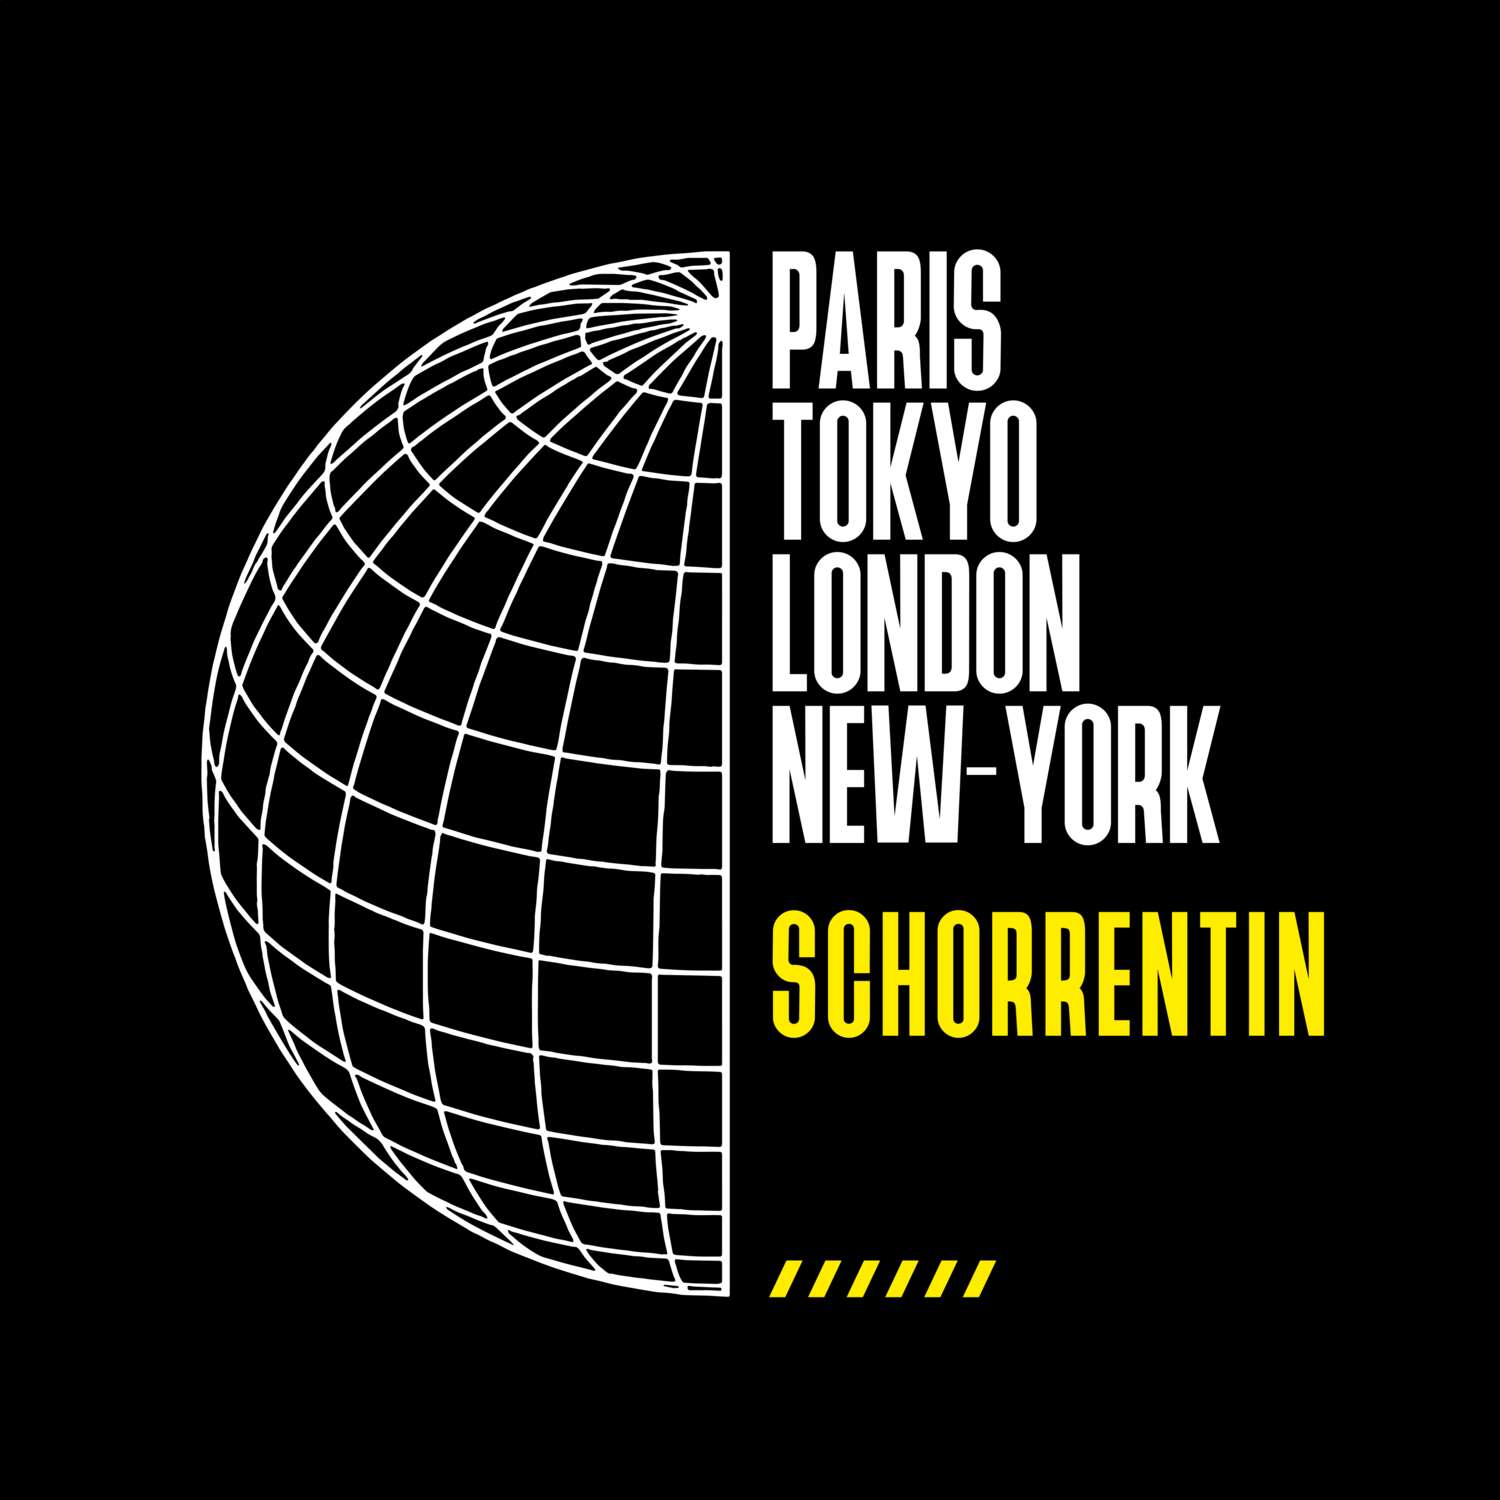 Schorrentin T-Shirt »Paris Tokyo London«